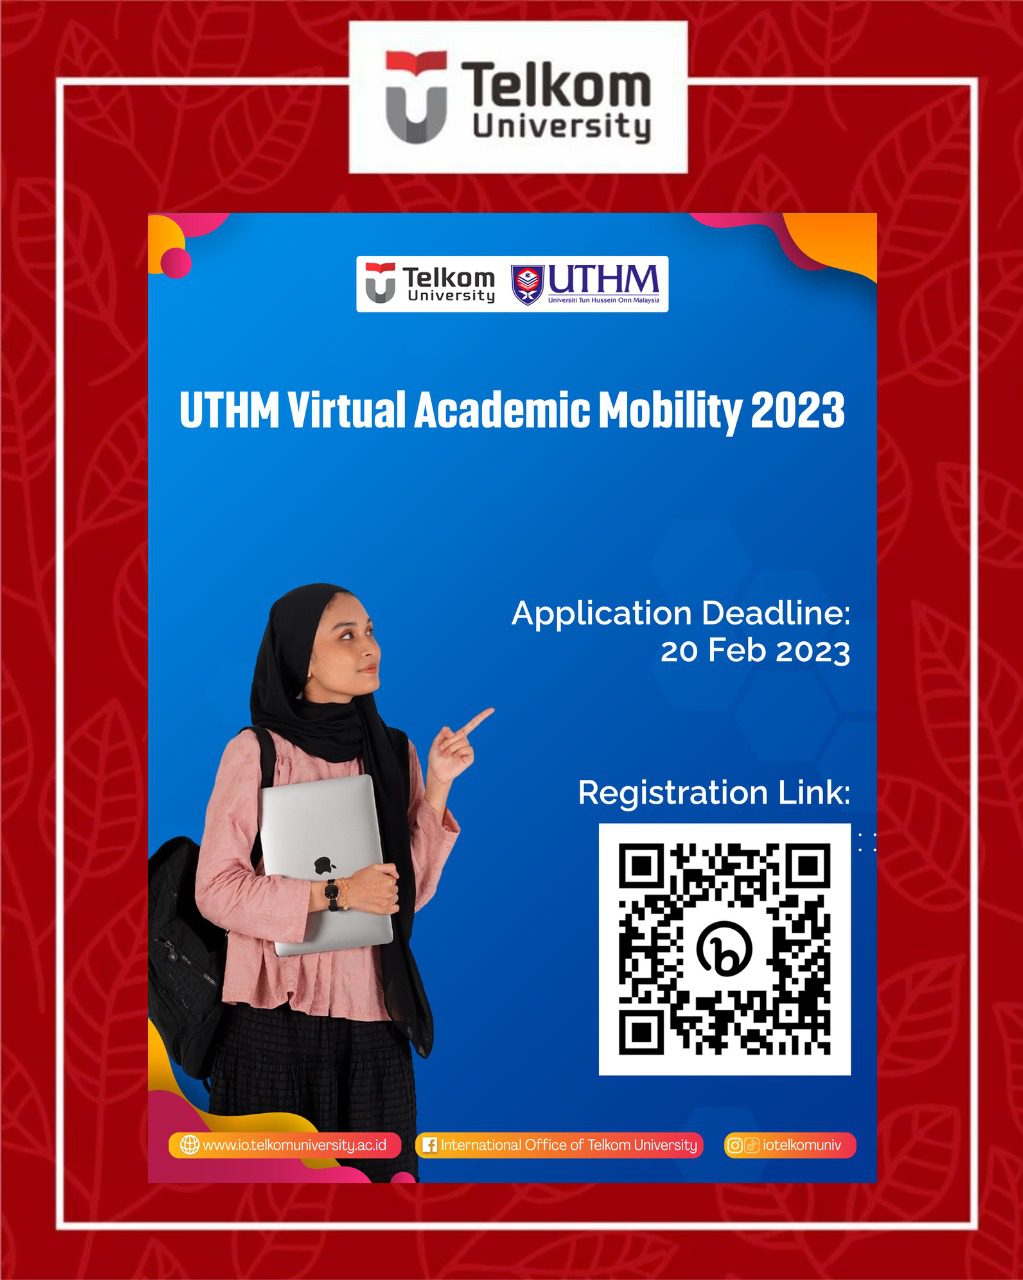 UTHM Virtual Academic Mobility Program 2023 is OPEN